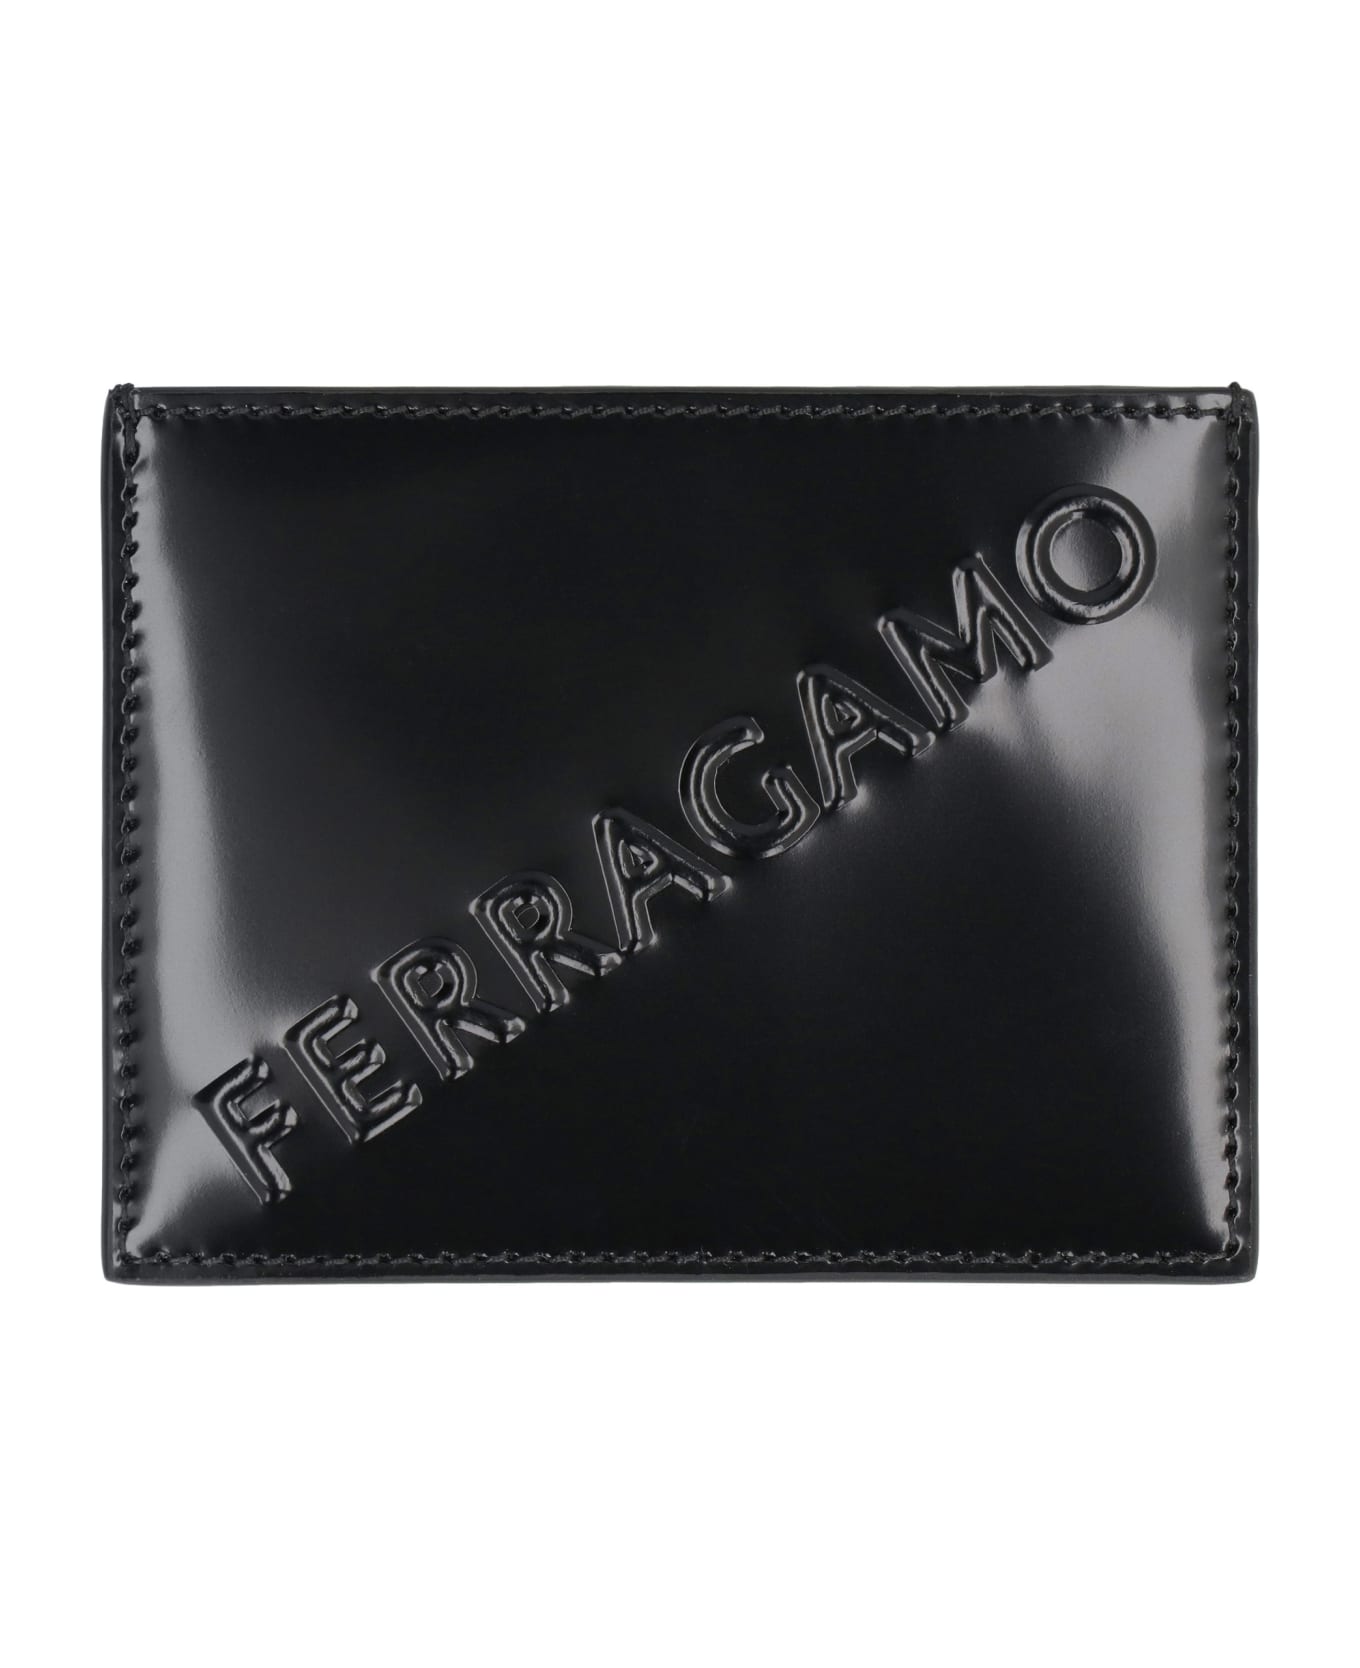 Ferragamo Leather Card Holder - black